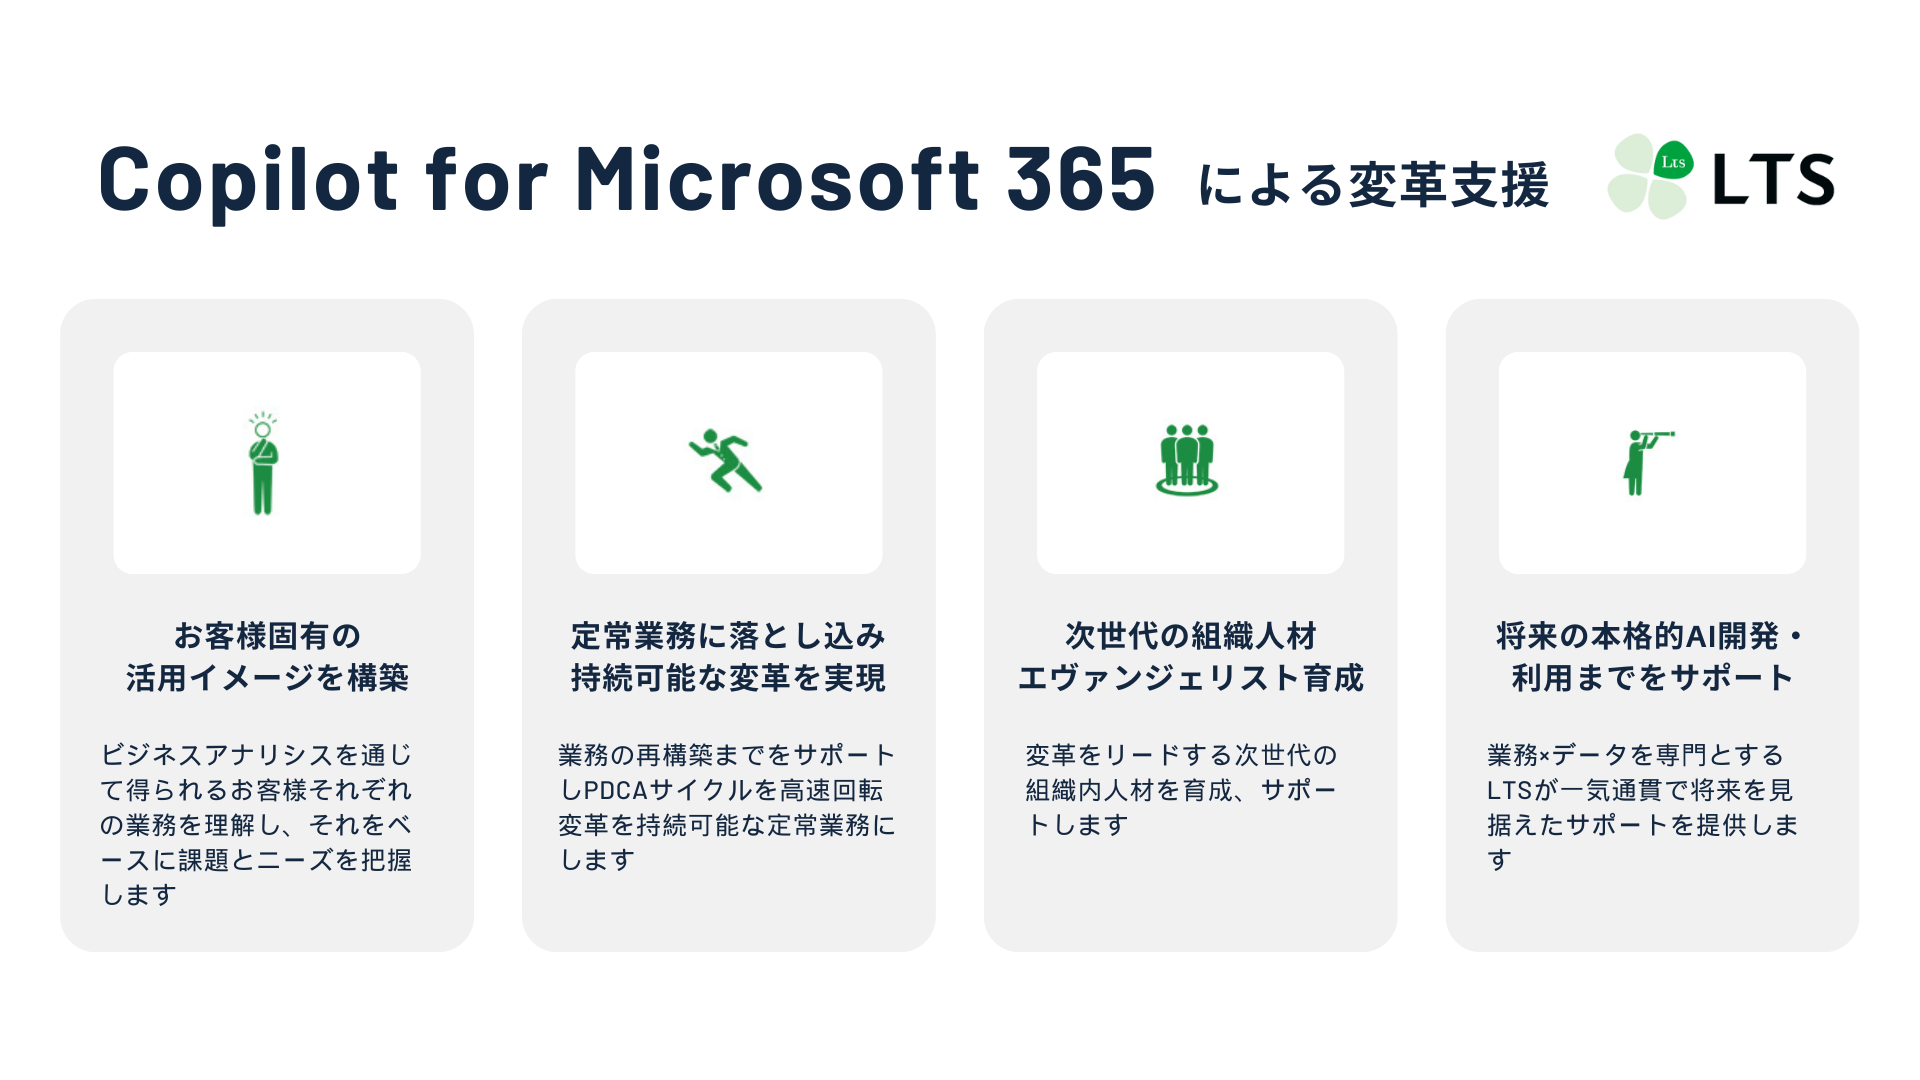 AIőɊp uCopilot for Microsoft 365ɂϊvxvJn